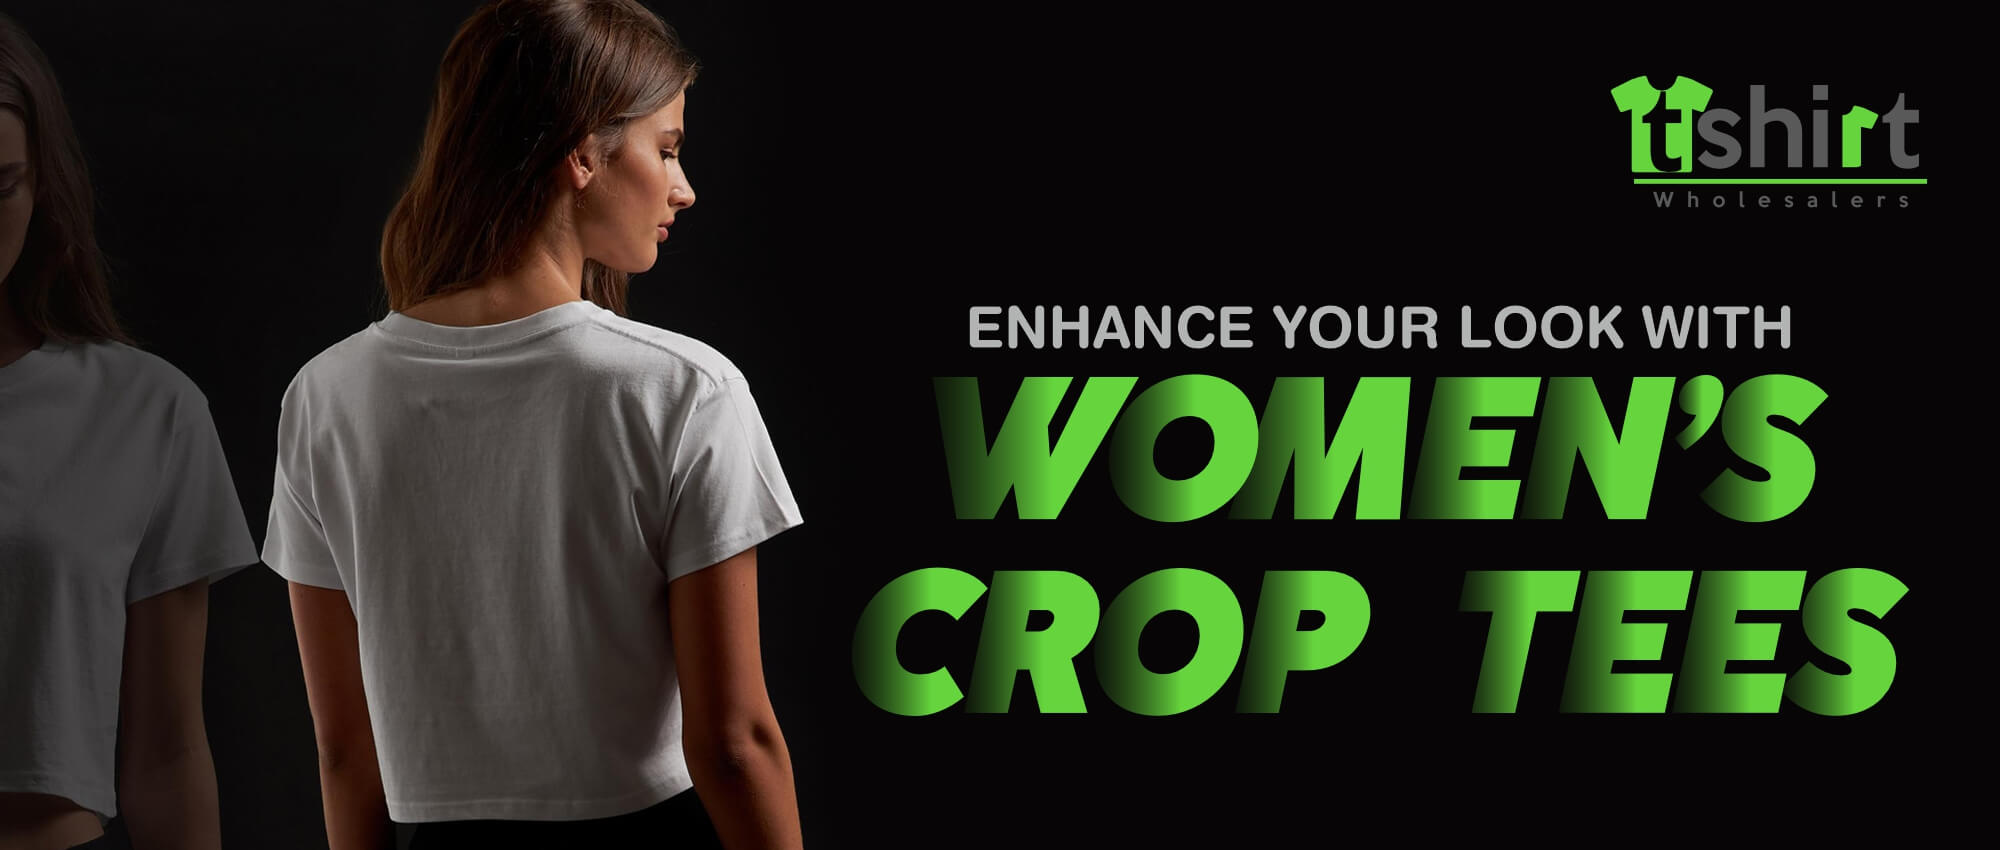 ENHANCE YOUR LOOK WITH WOMEN'S CROP TEES